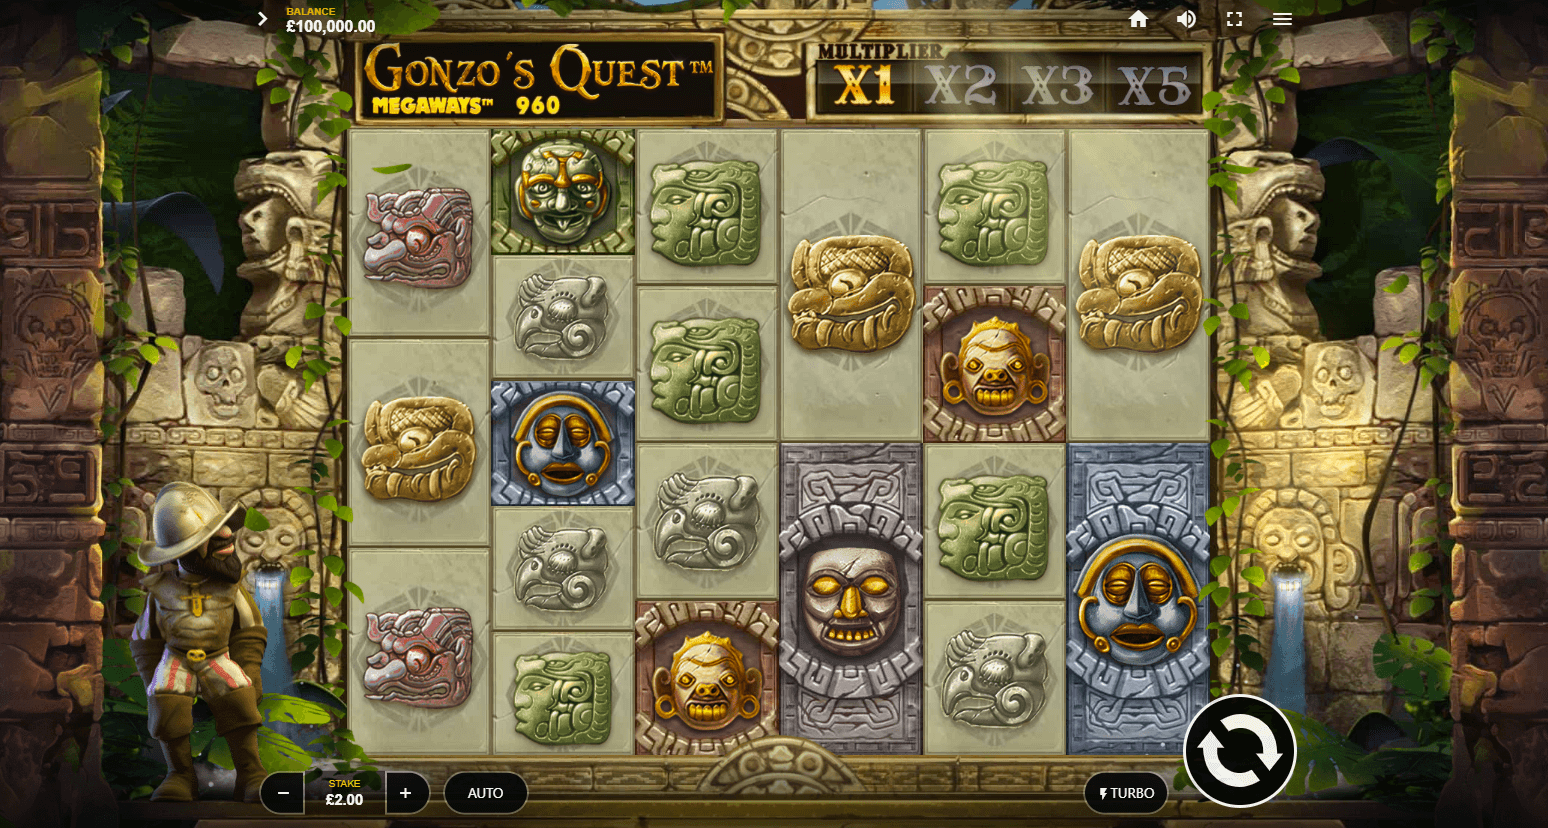 Gonzo’s Quest Megaways Review